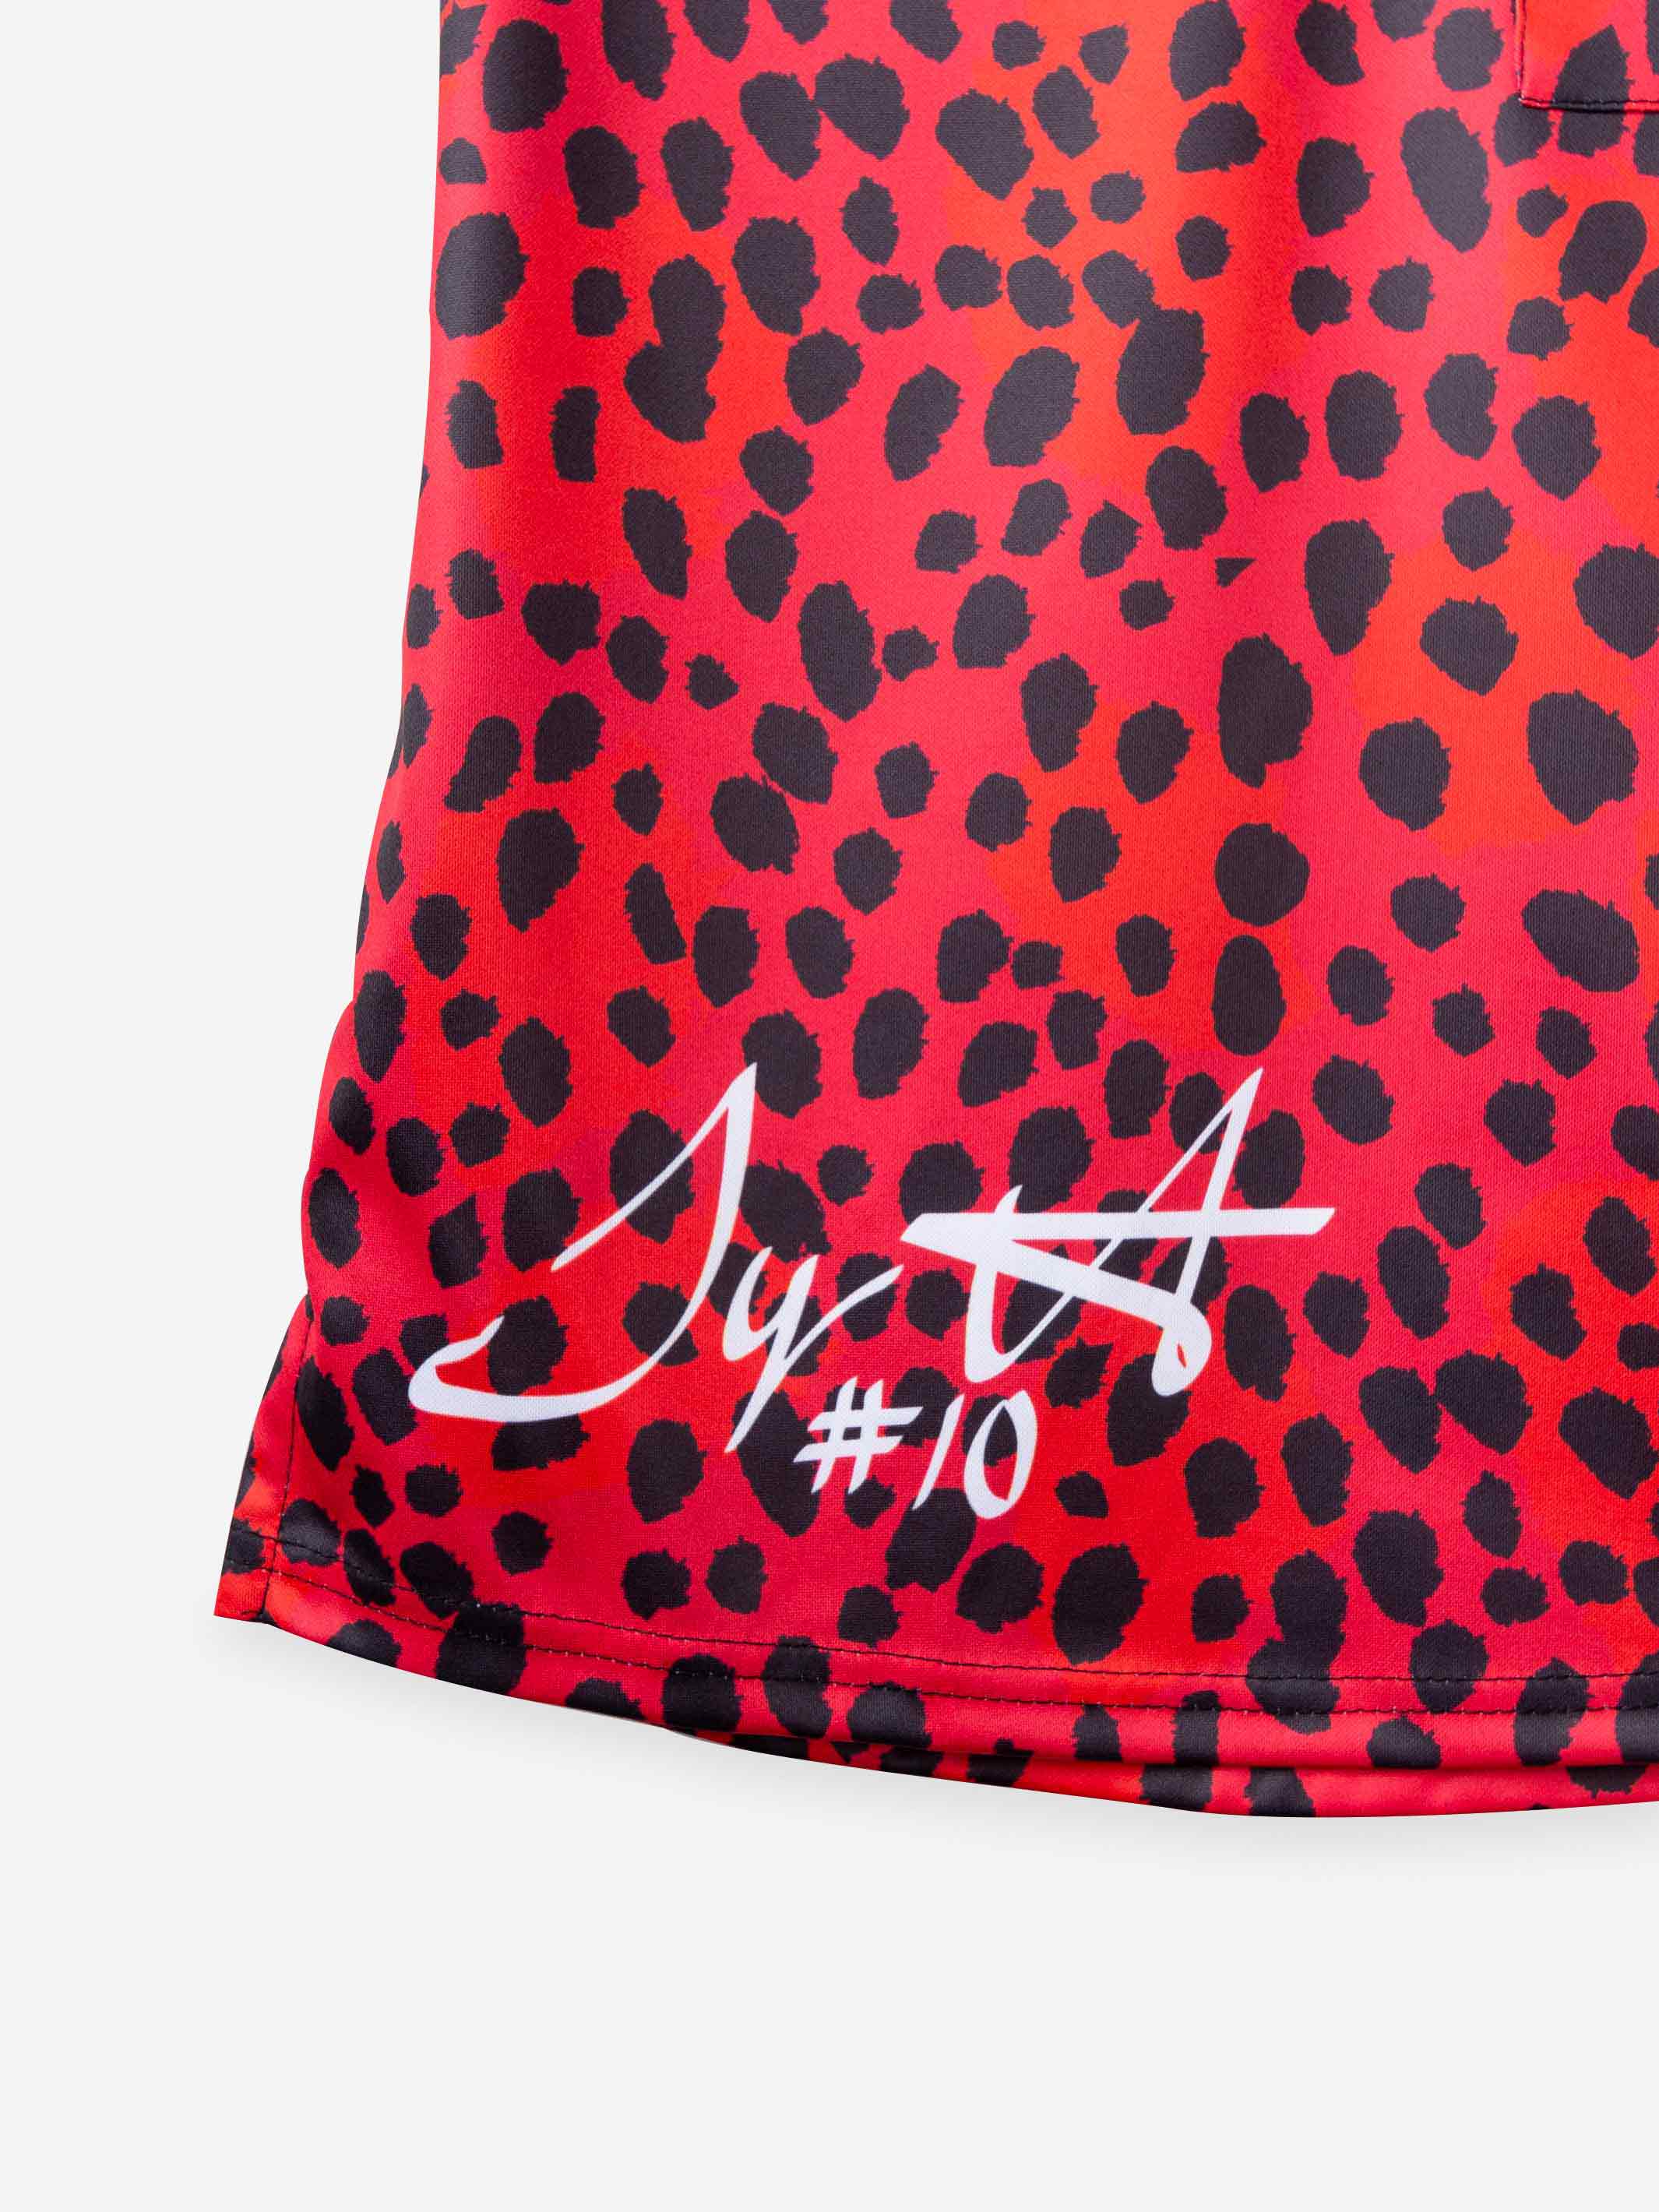 Tyreek Hill Cheetah Print Scrub Top For Women signature